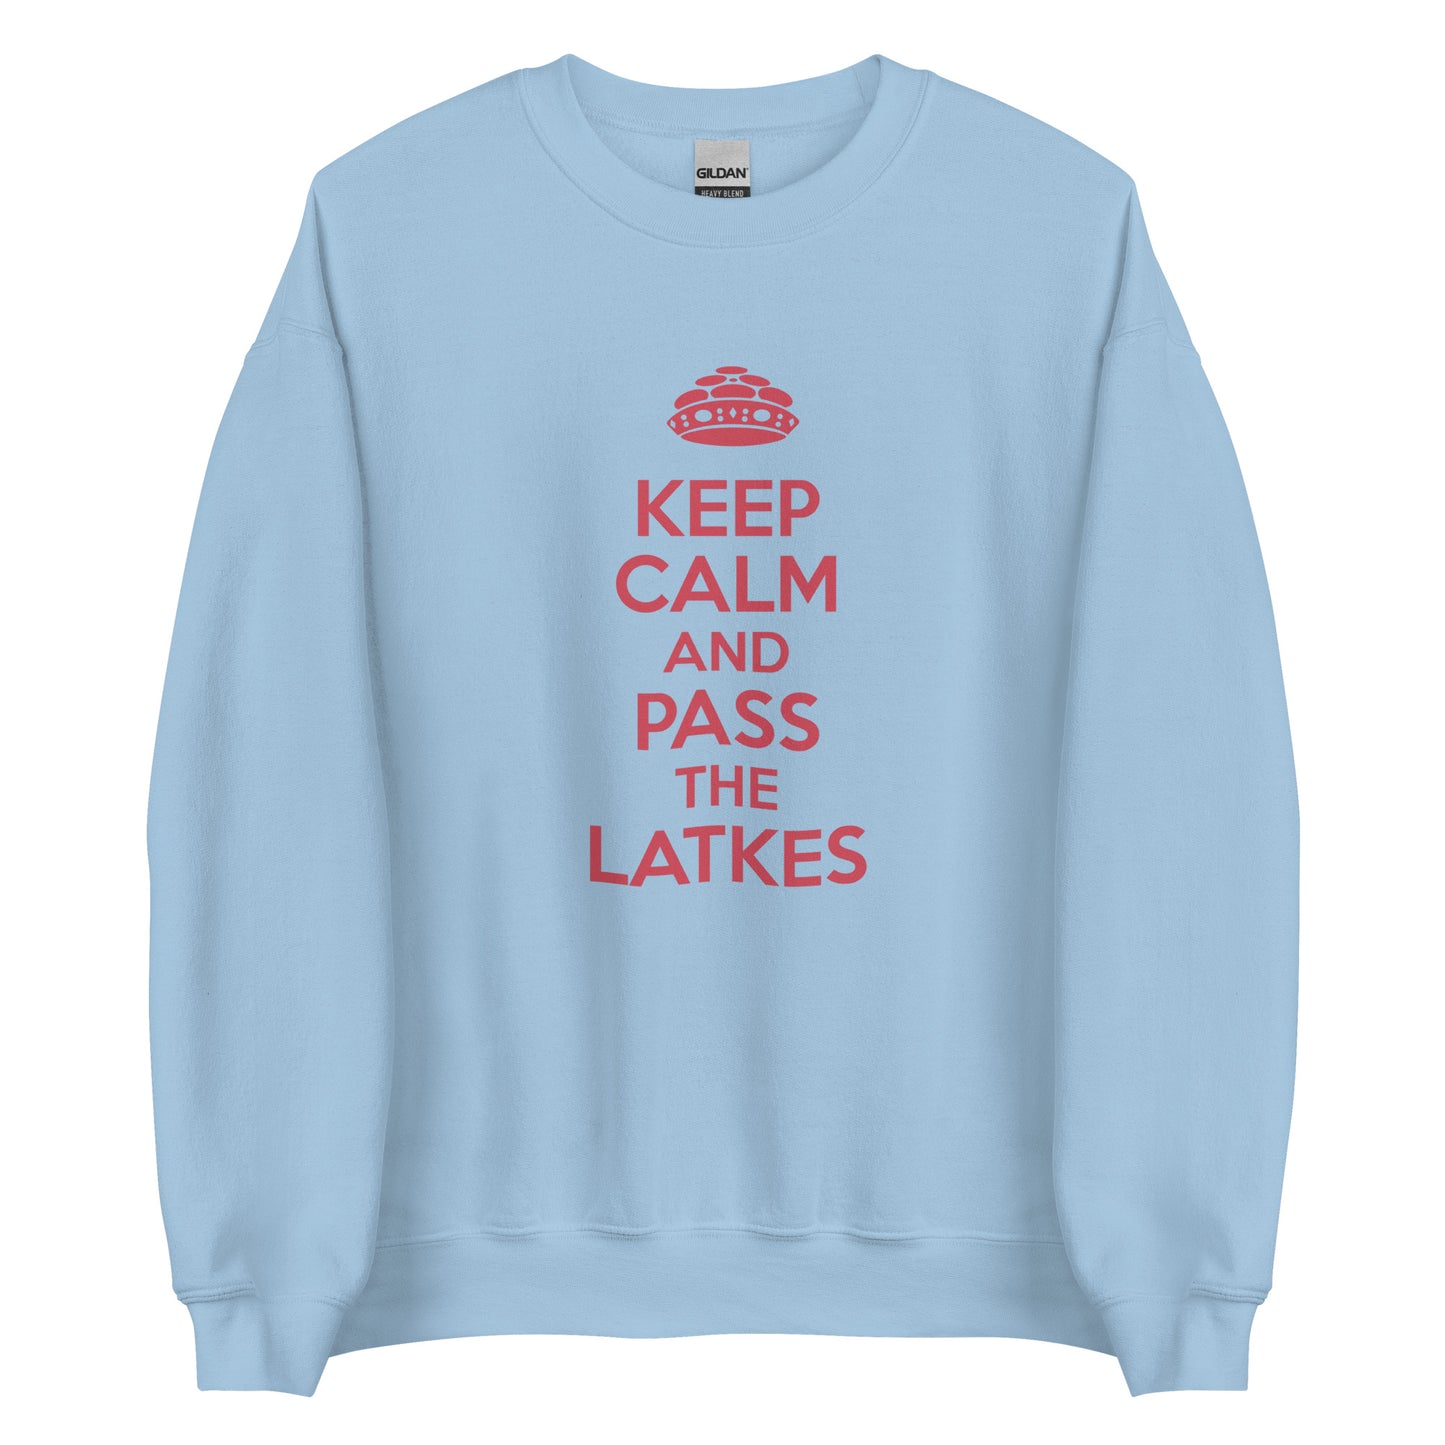 Chanukah Sweatshirt "Keep Calm And Pass The latkes" (Unisex)